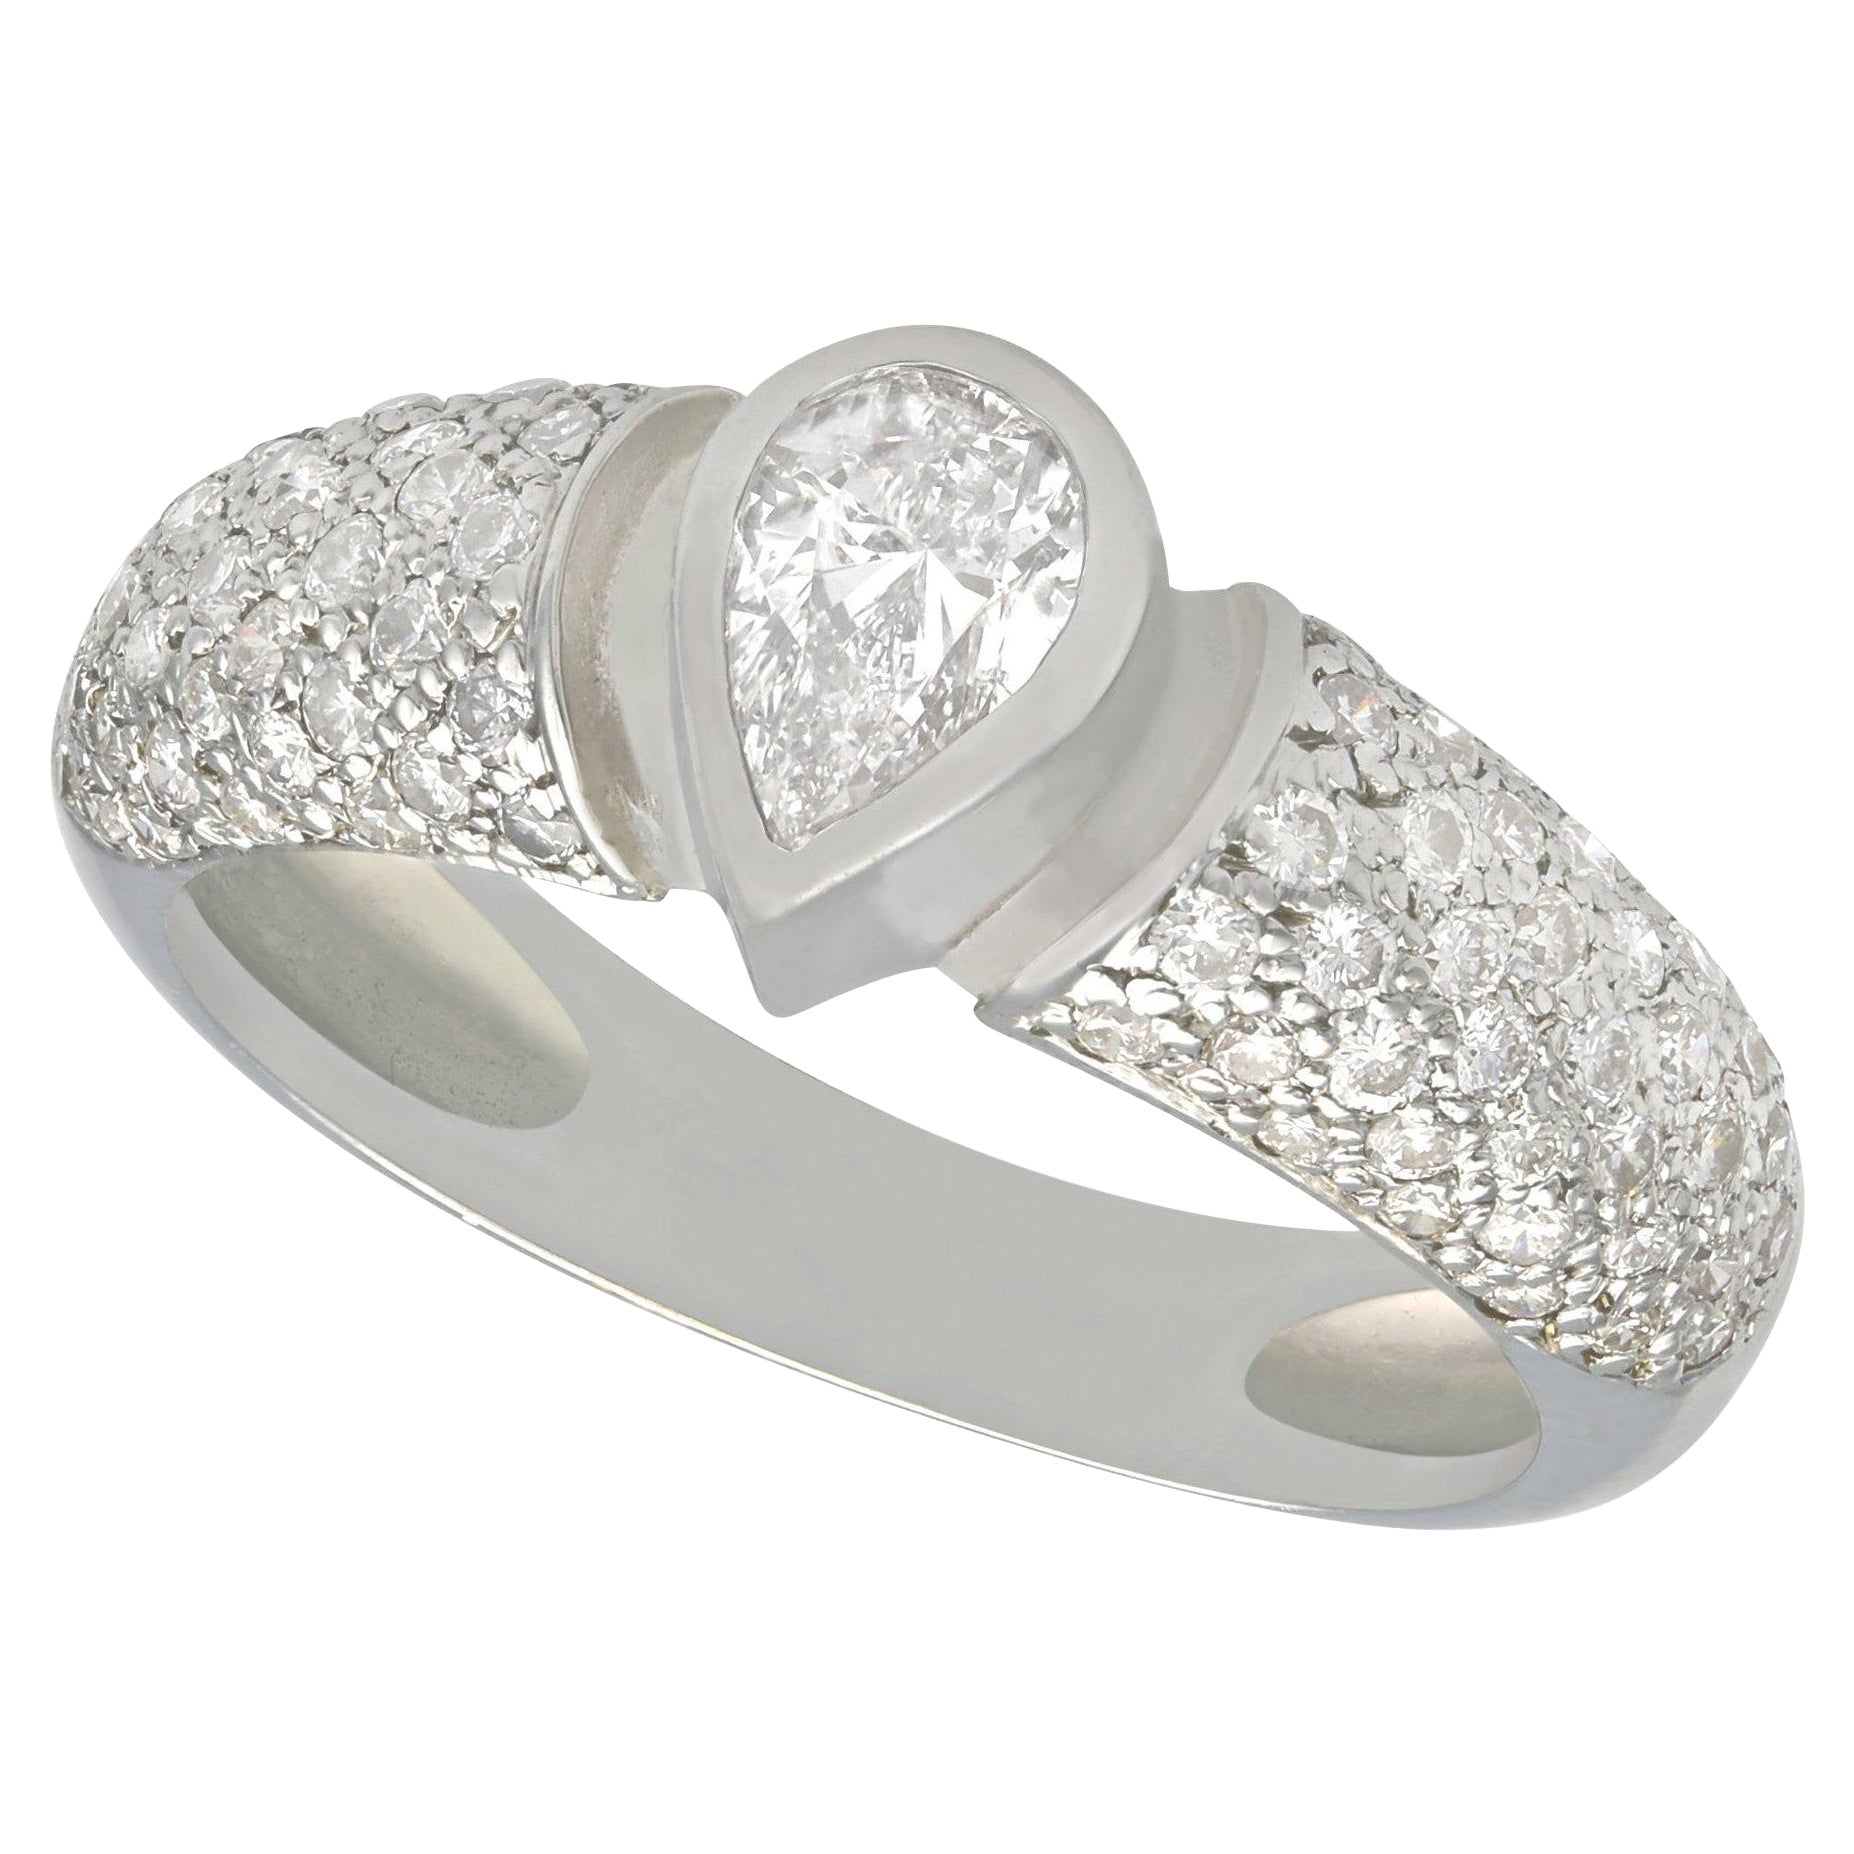 Vintage 1.33 Carat Diamond and White Gold Engagement Ring, circa 1990